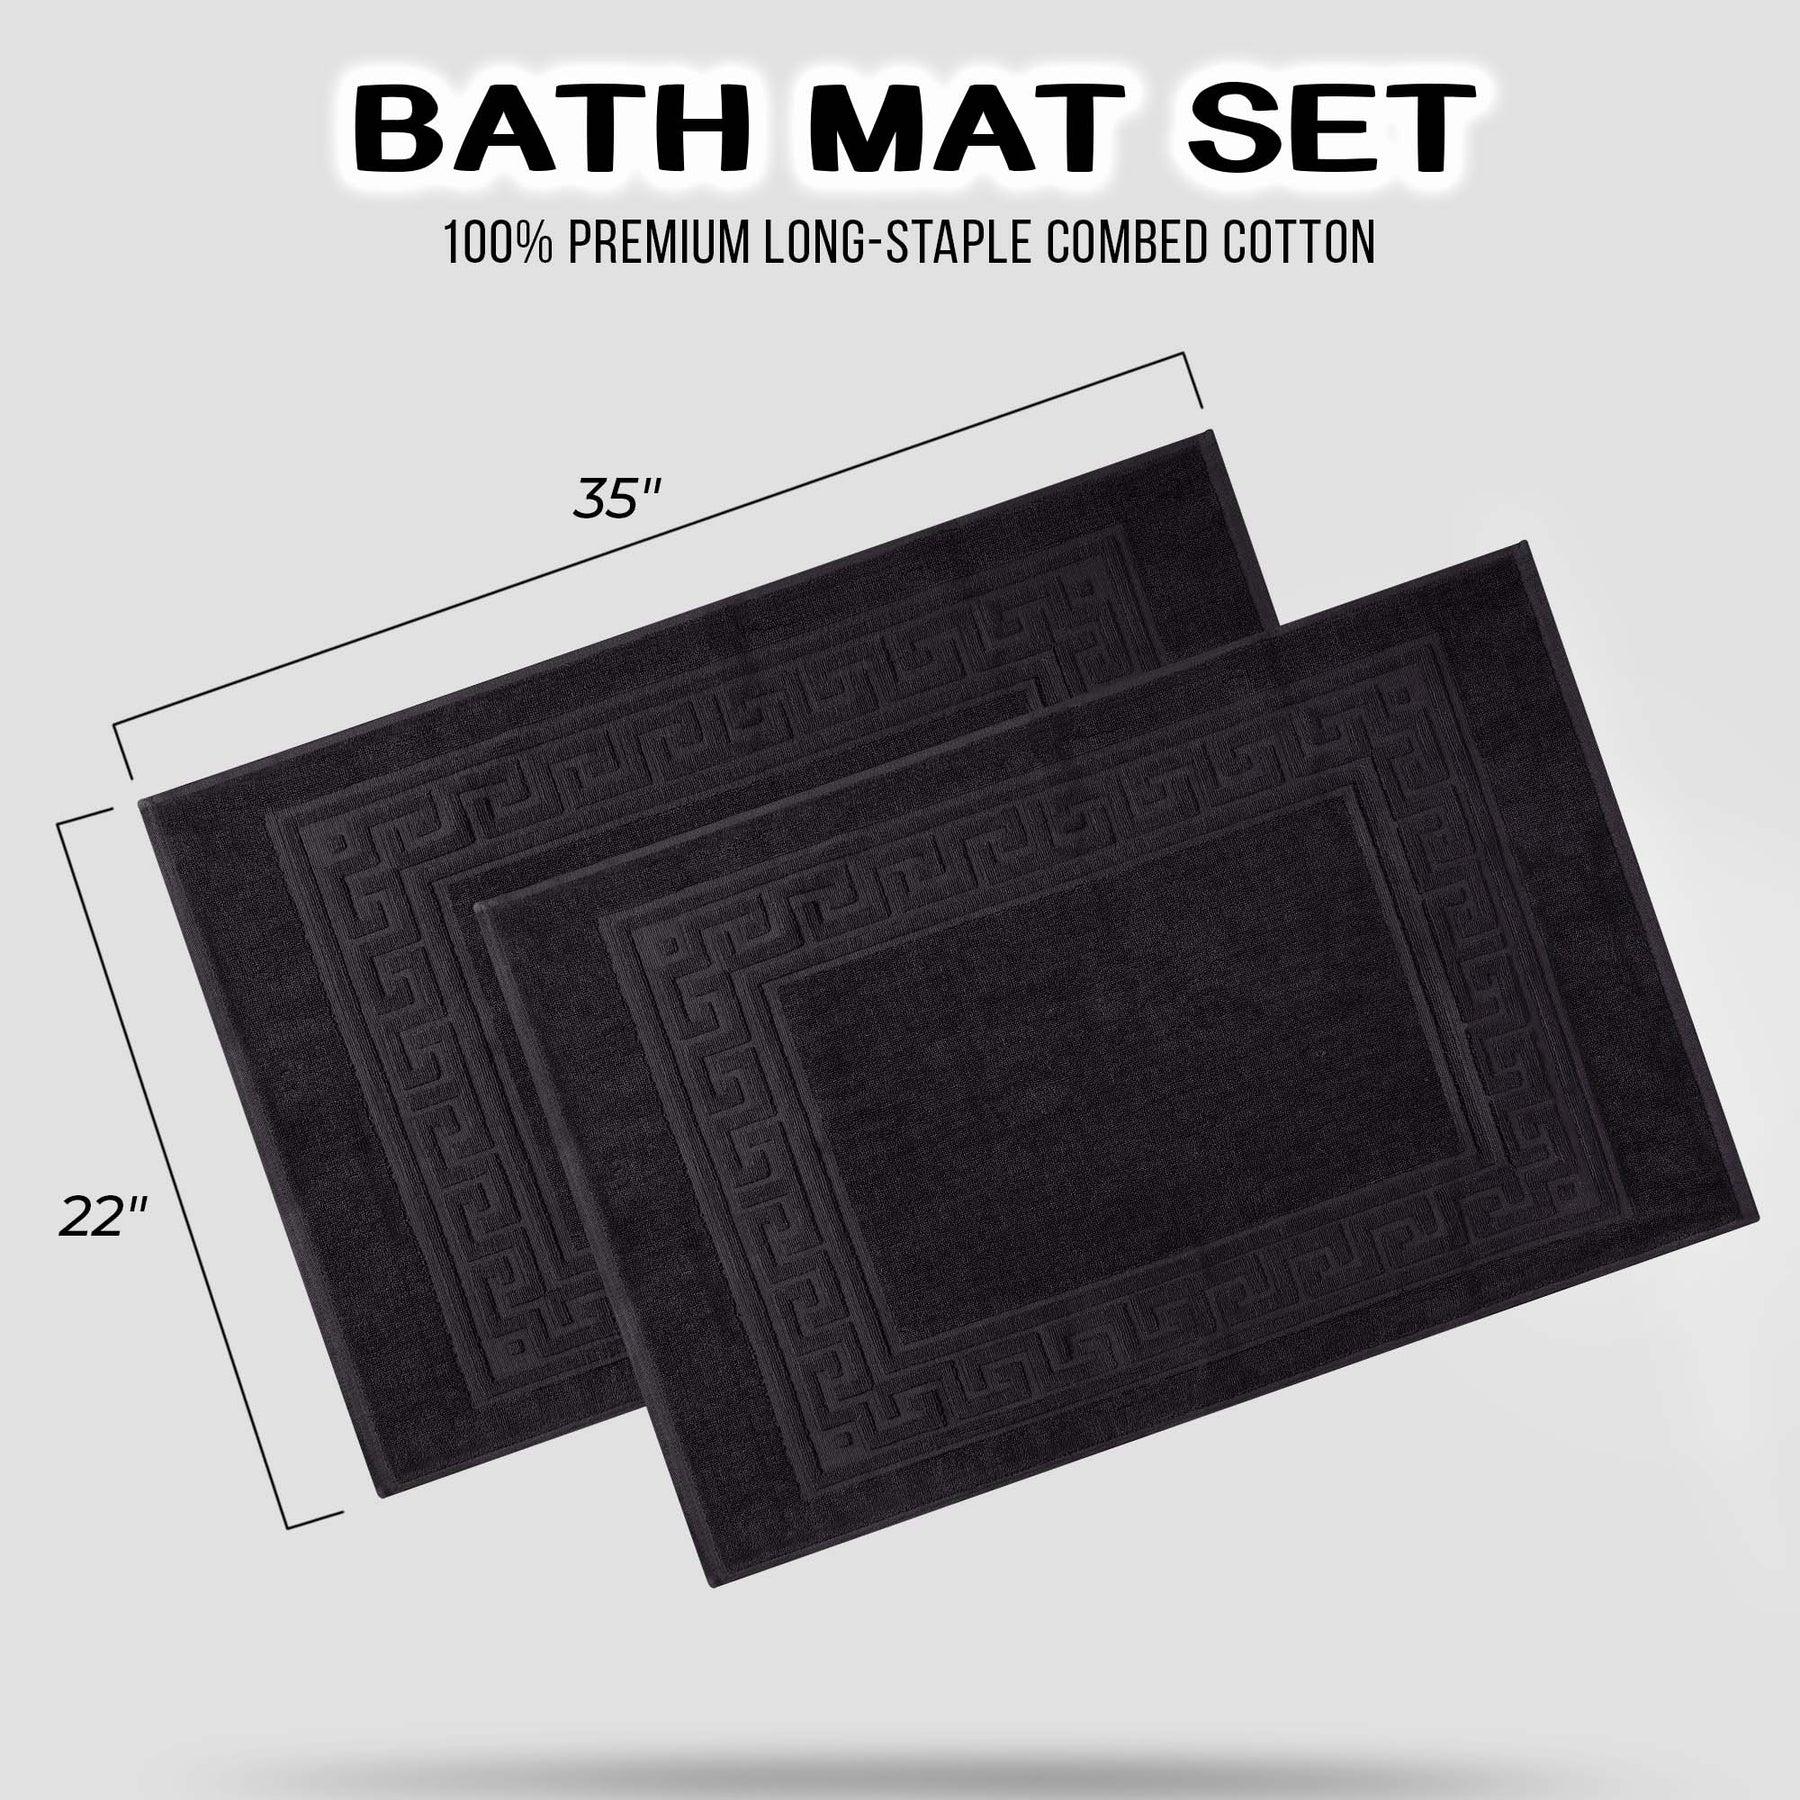 100% Cotton Highly-Absorbent Greek Key Border Solid 2-Piece Bath Mat Set - Black